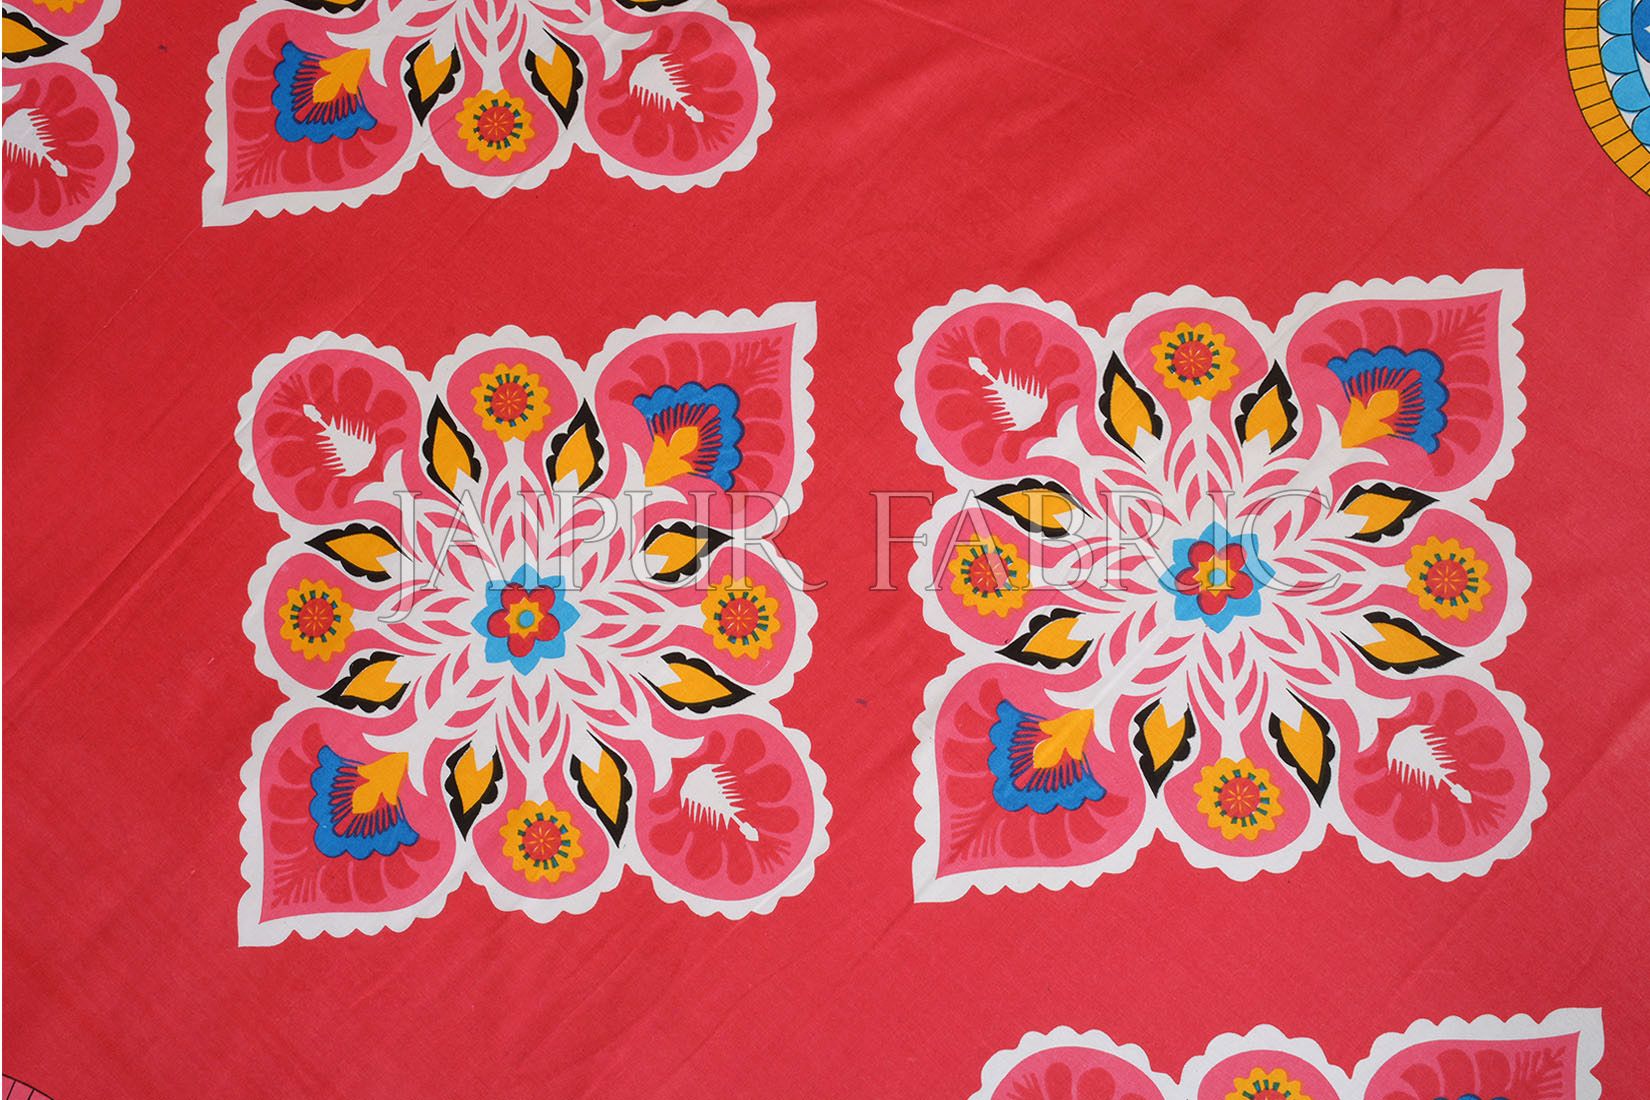 Red Base Multi Color Rangoli Print Cotton Double Bed Sheet